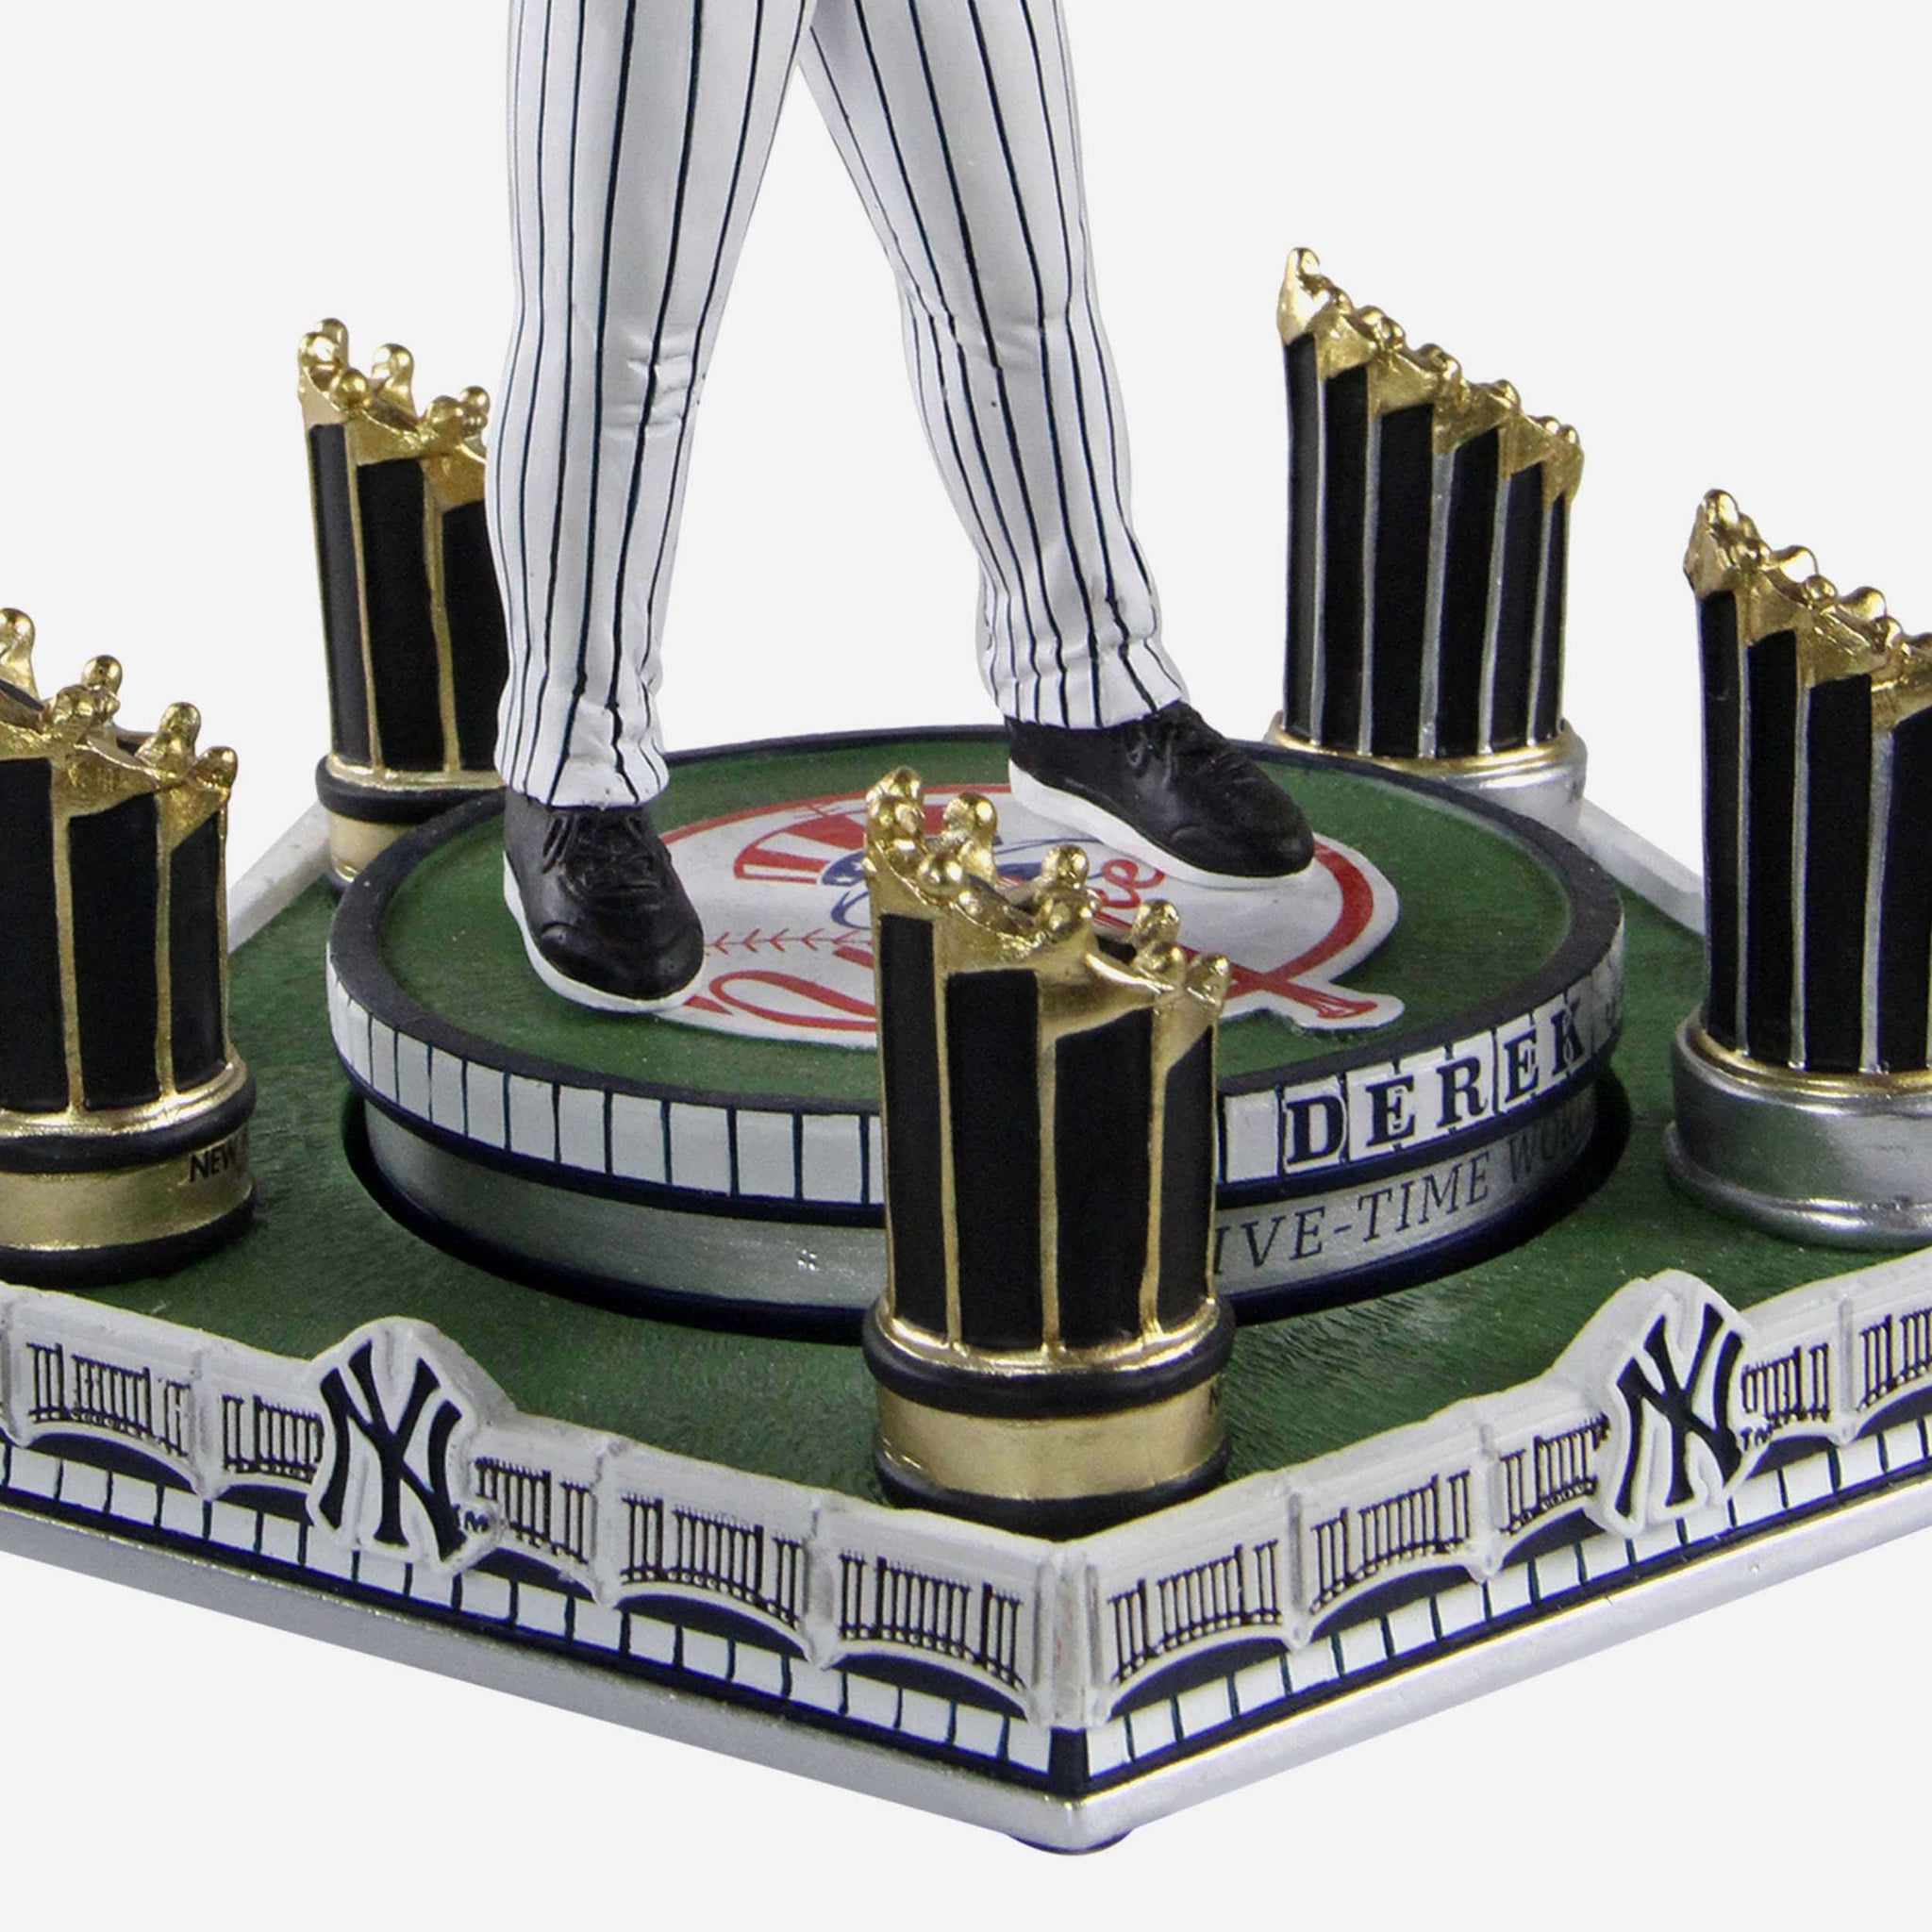 Derek Jeter New York Yankees Field Stripe Bighead Bobblehead Officially Licensed by MLB